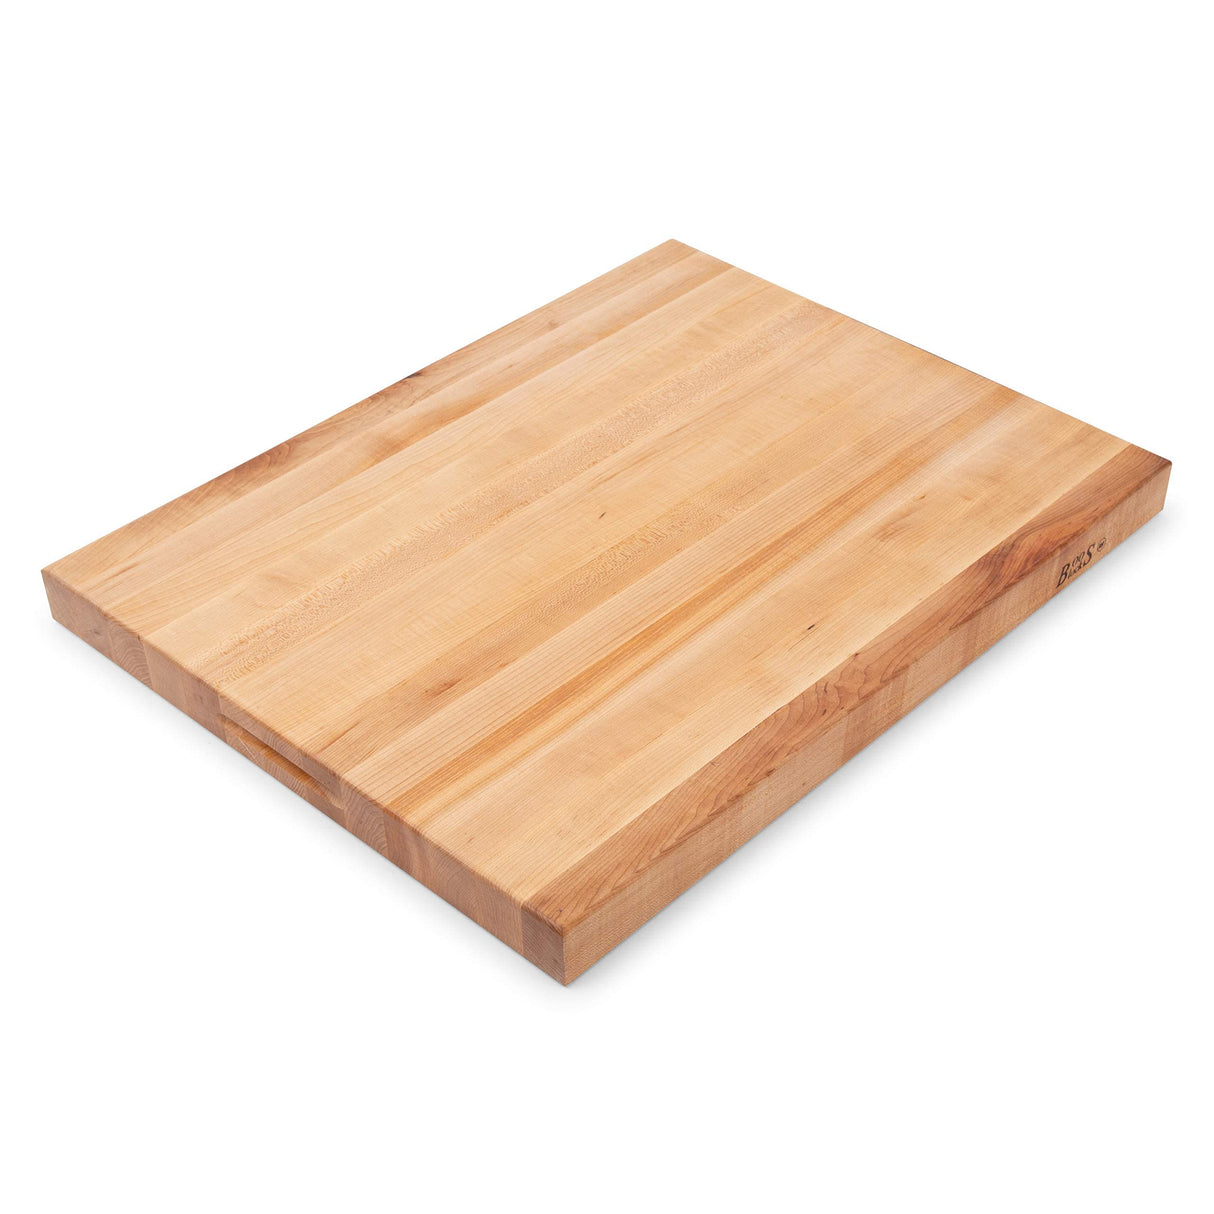 John Boos RA06 Maple Wood Cutting Board for Kitchen Prep 30 Inches x 23 Inches, 2.25 Thick Reversible End Grain Rectangular Charcuterie Block 30X23.25X2.25 MPL-EDGE GR-REV-GRIPS